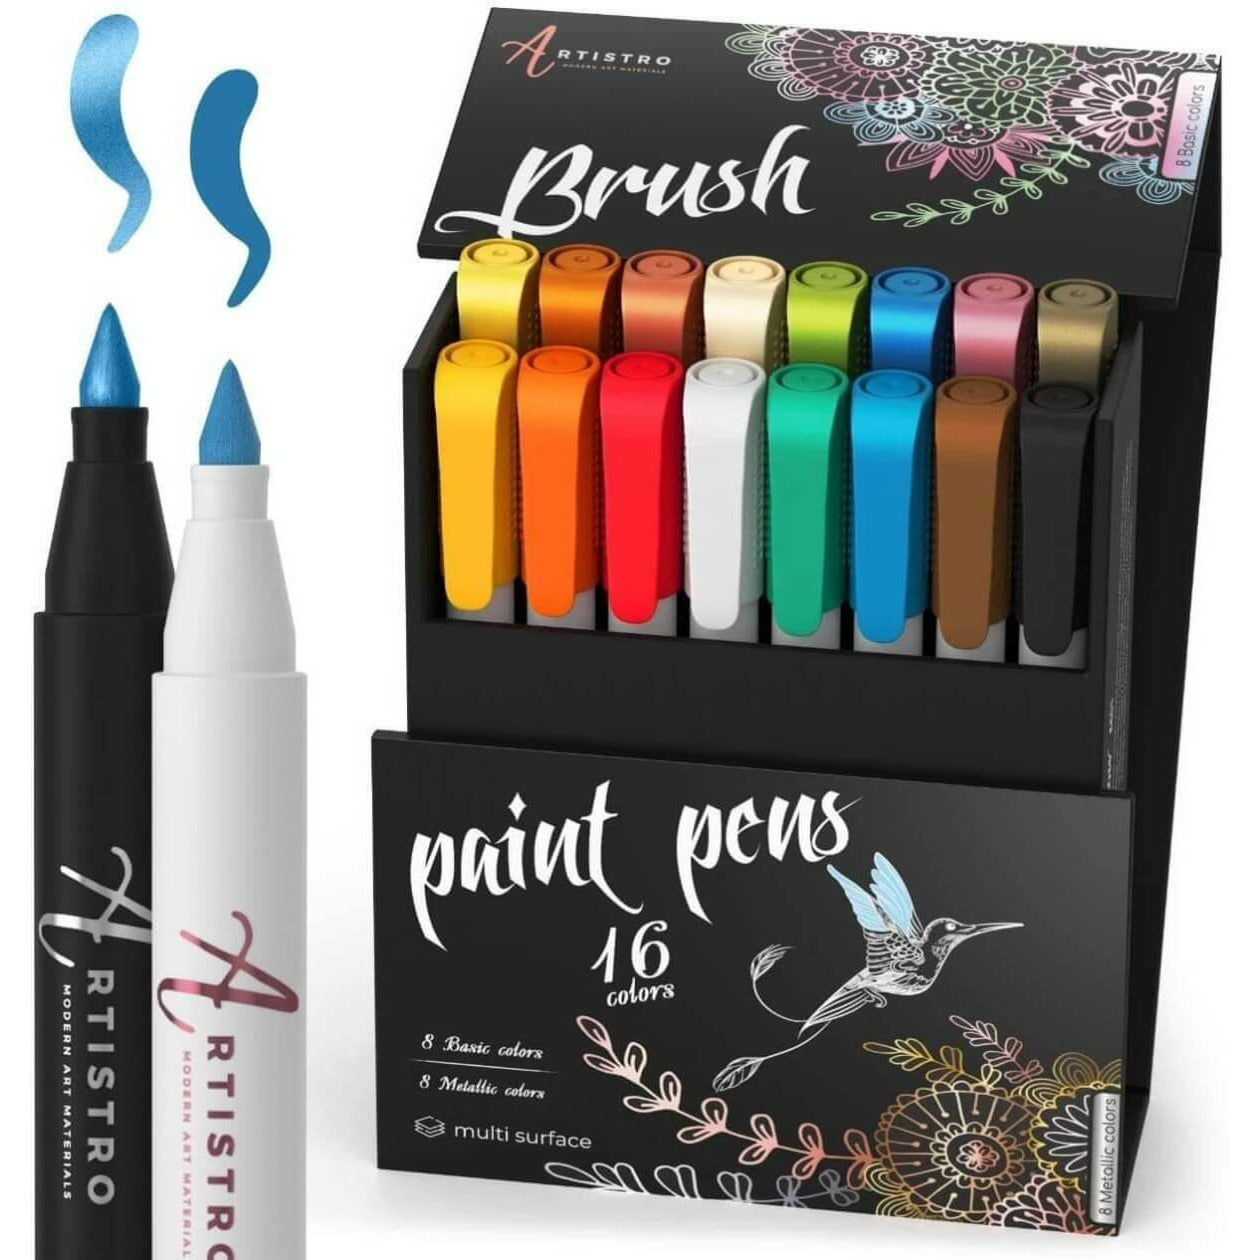  ARTISTRO 16 Brush Paint Pens and 12 Acrylic Glitter